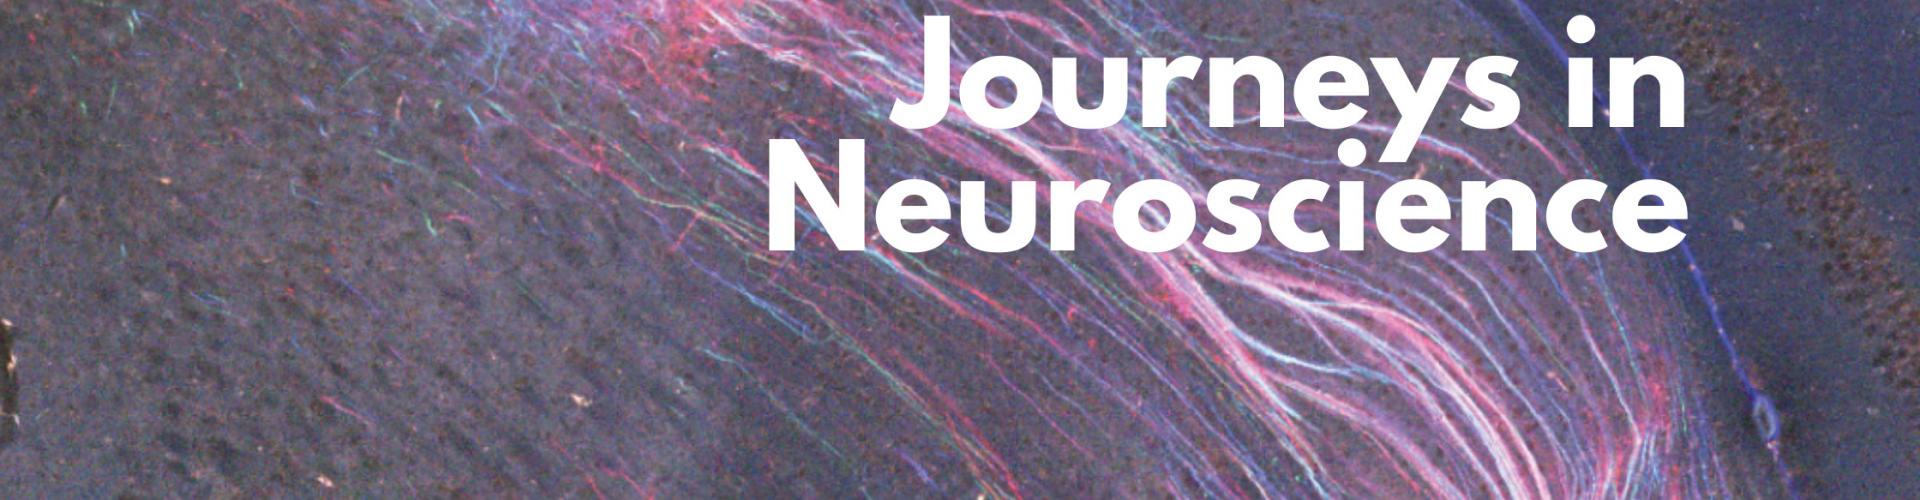 Journeys in Neuroscience 